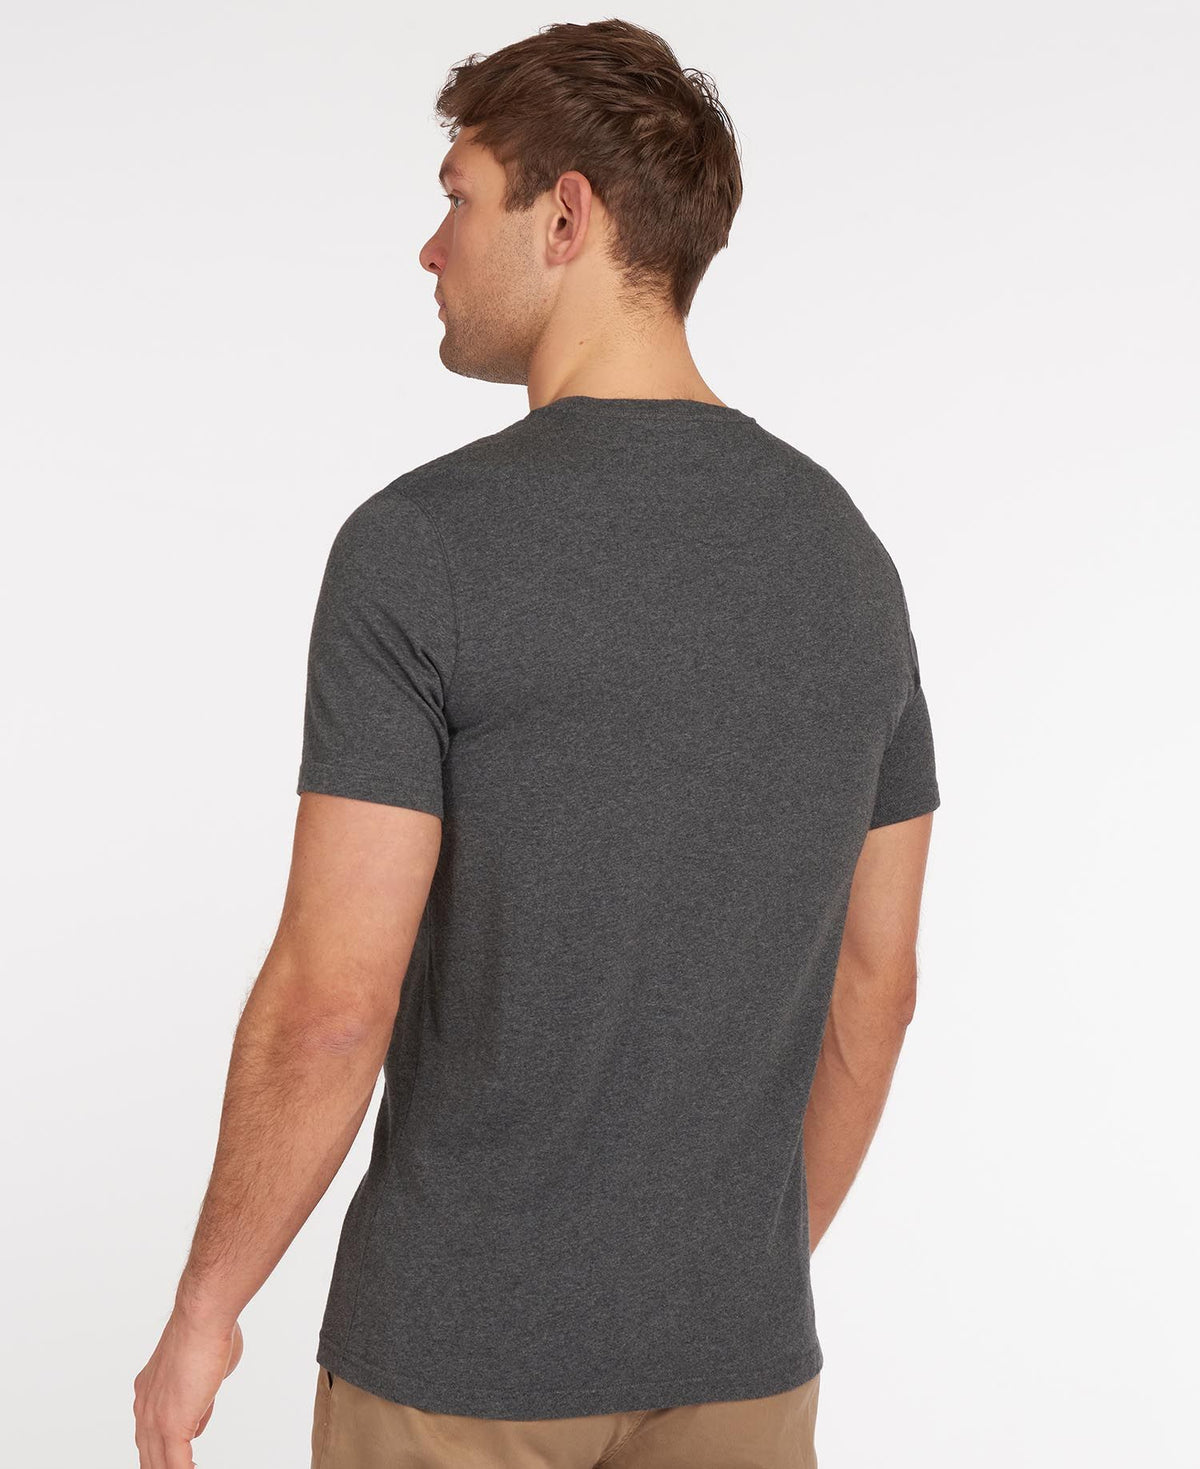 Barbour Men's Sports T-Shirt - Short Sleeved, 03, Mts0331, Slate Marl